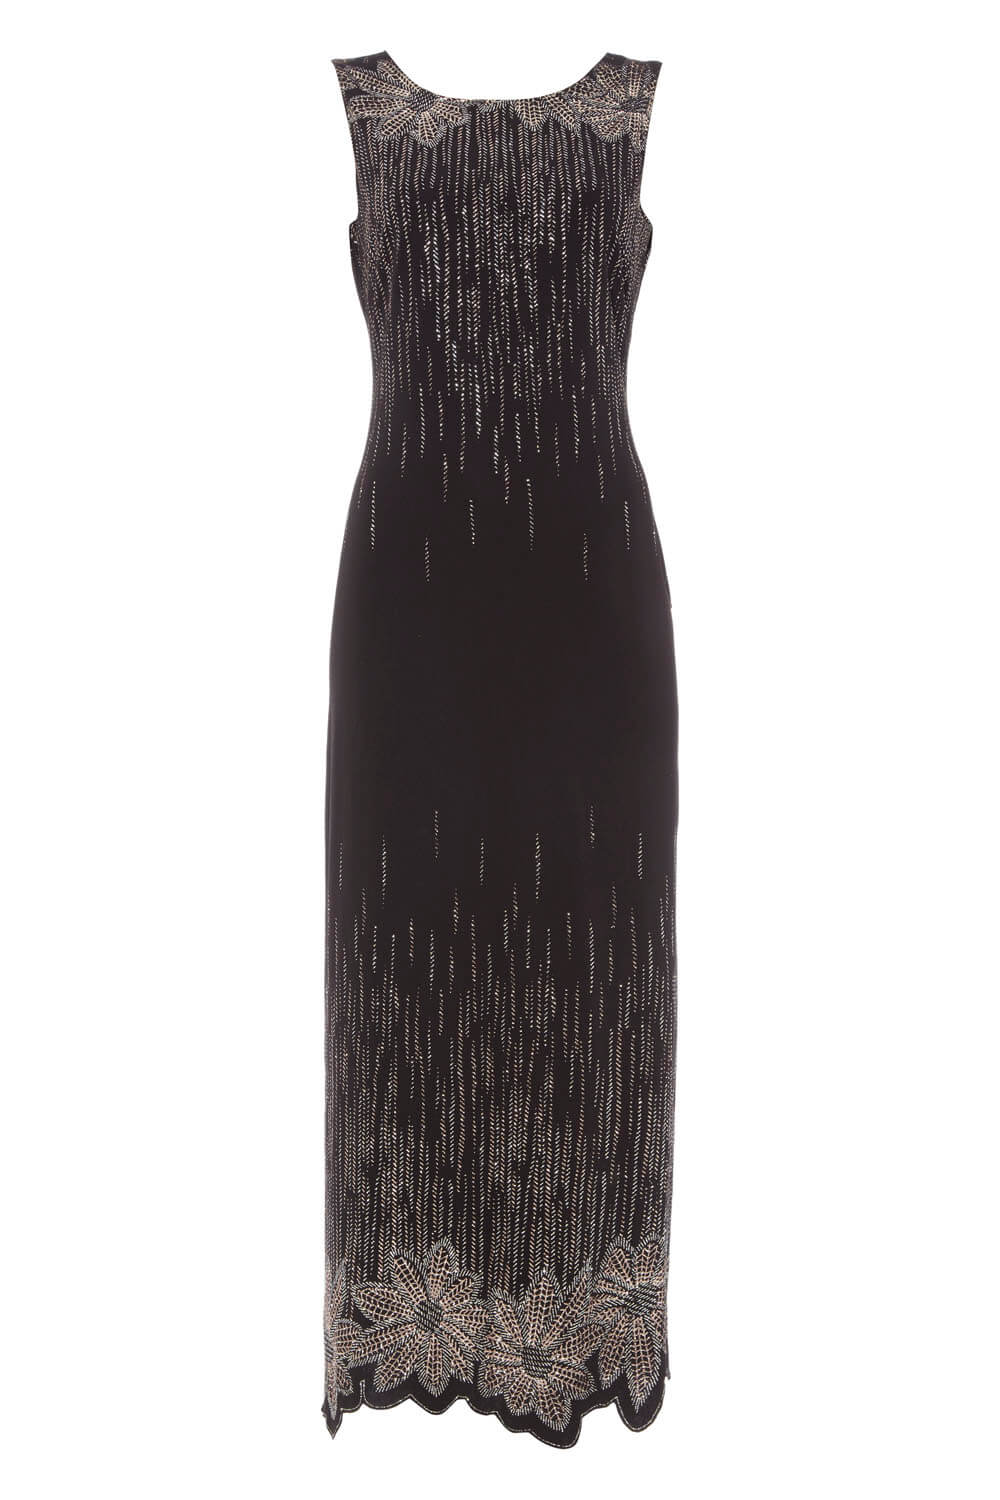 Black Glitter Detail Floral Maxi Dress, Image 5 of 5